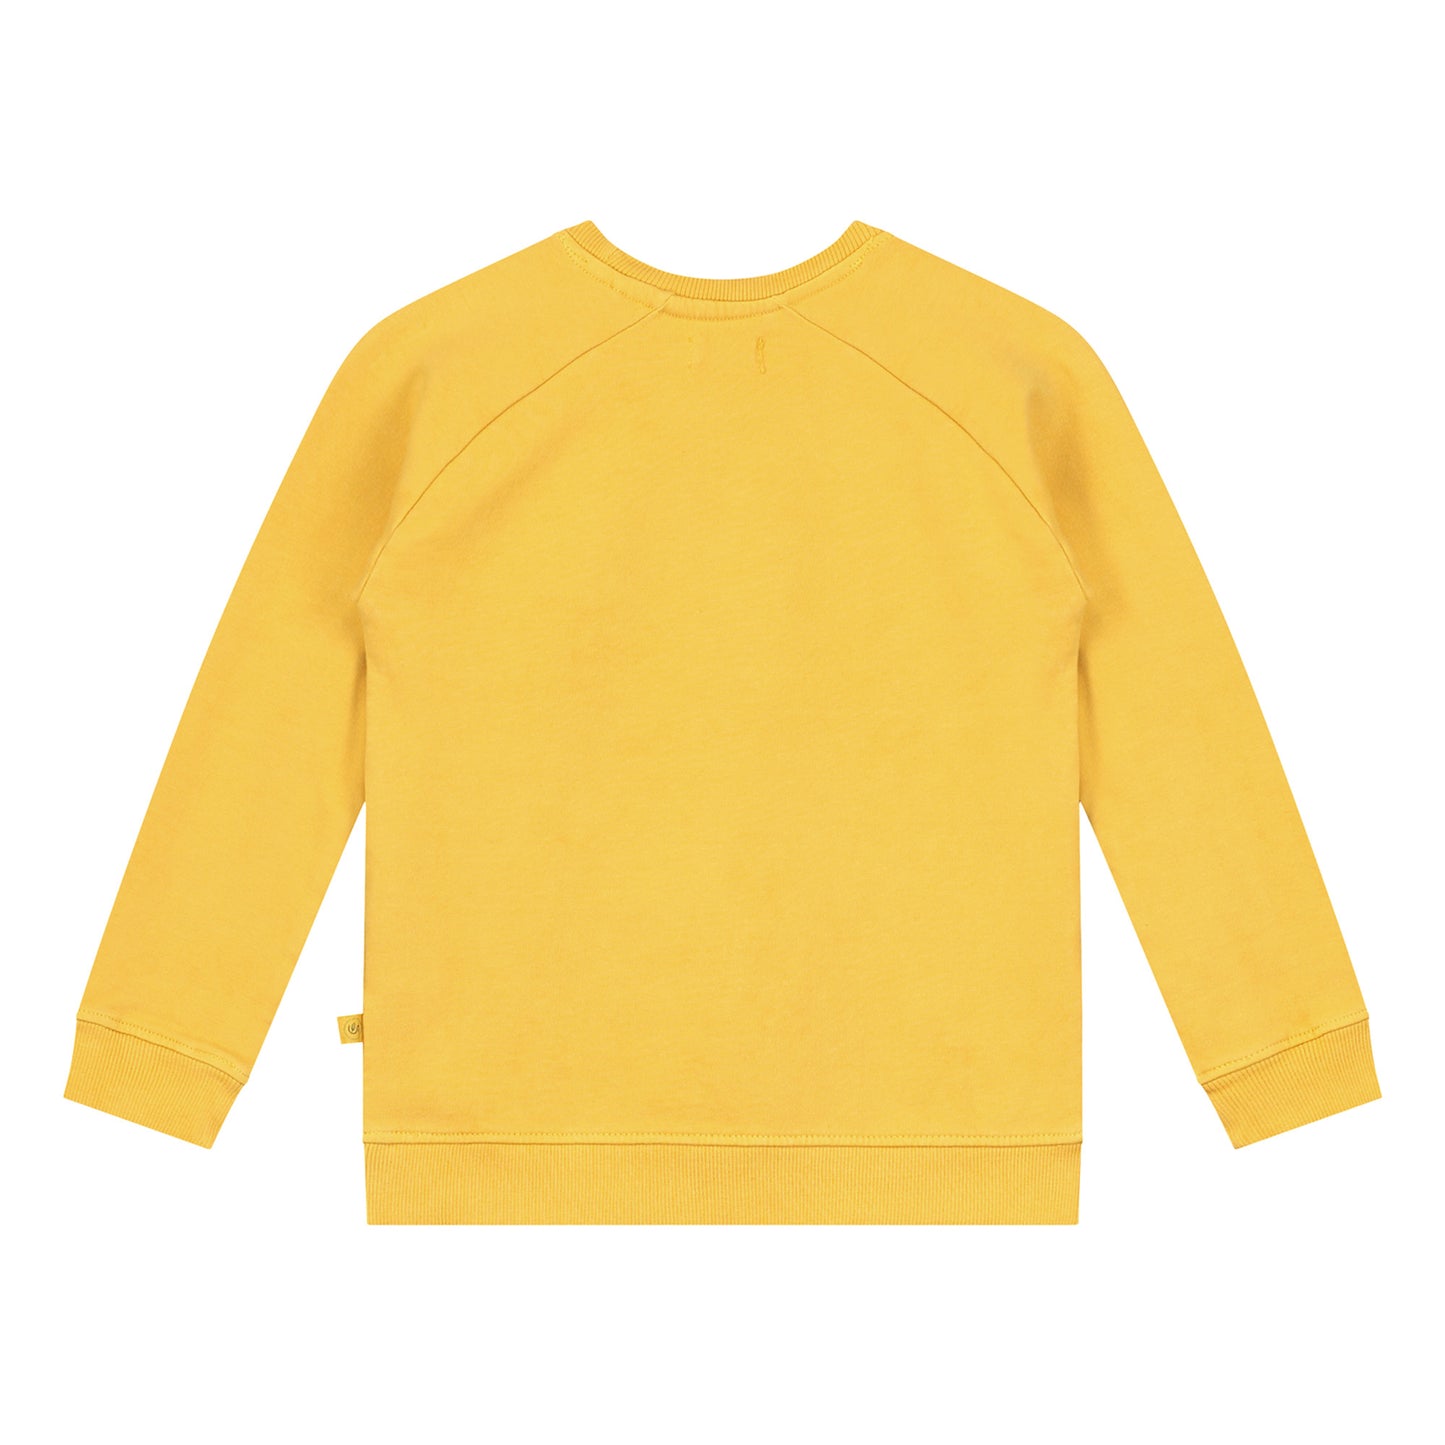 Unisex-Sweatshirt aus Baumwollfleece